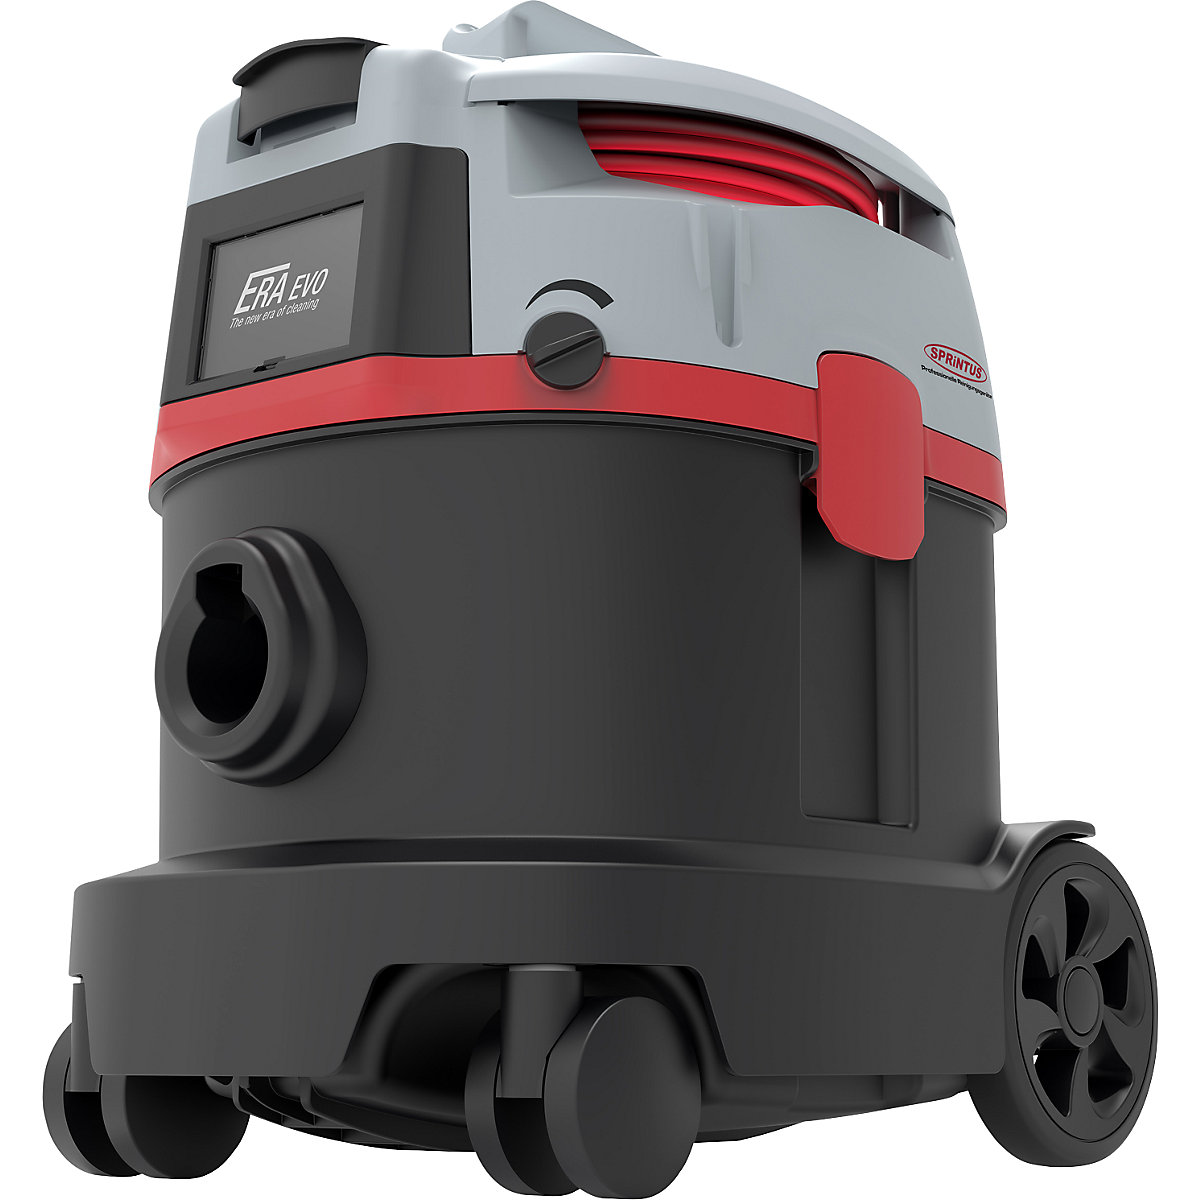 Dry vacuum cleaner for sensitive areas – Sprintus